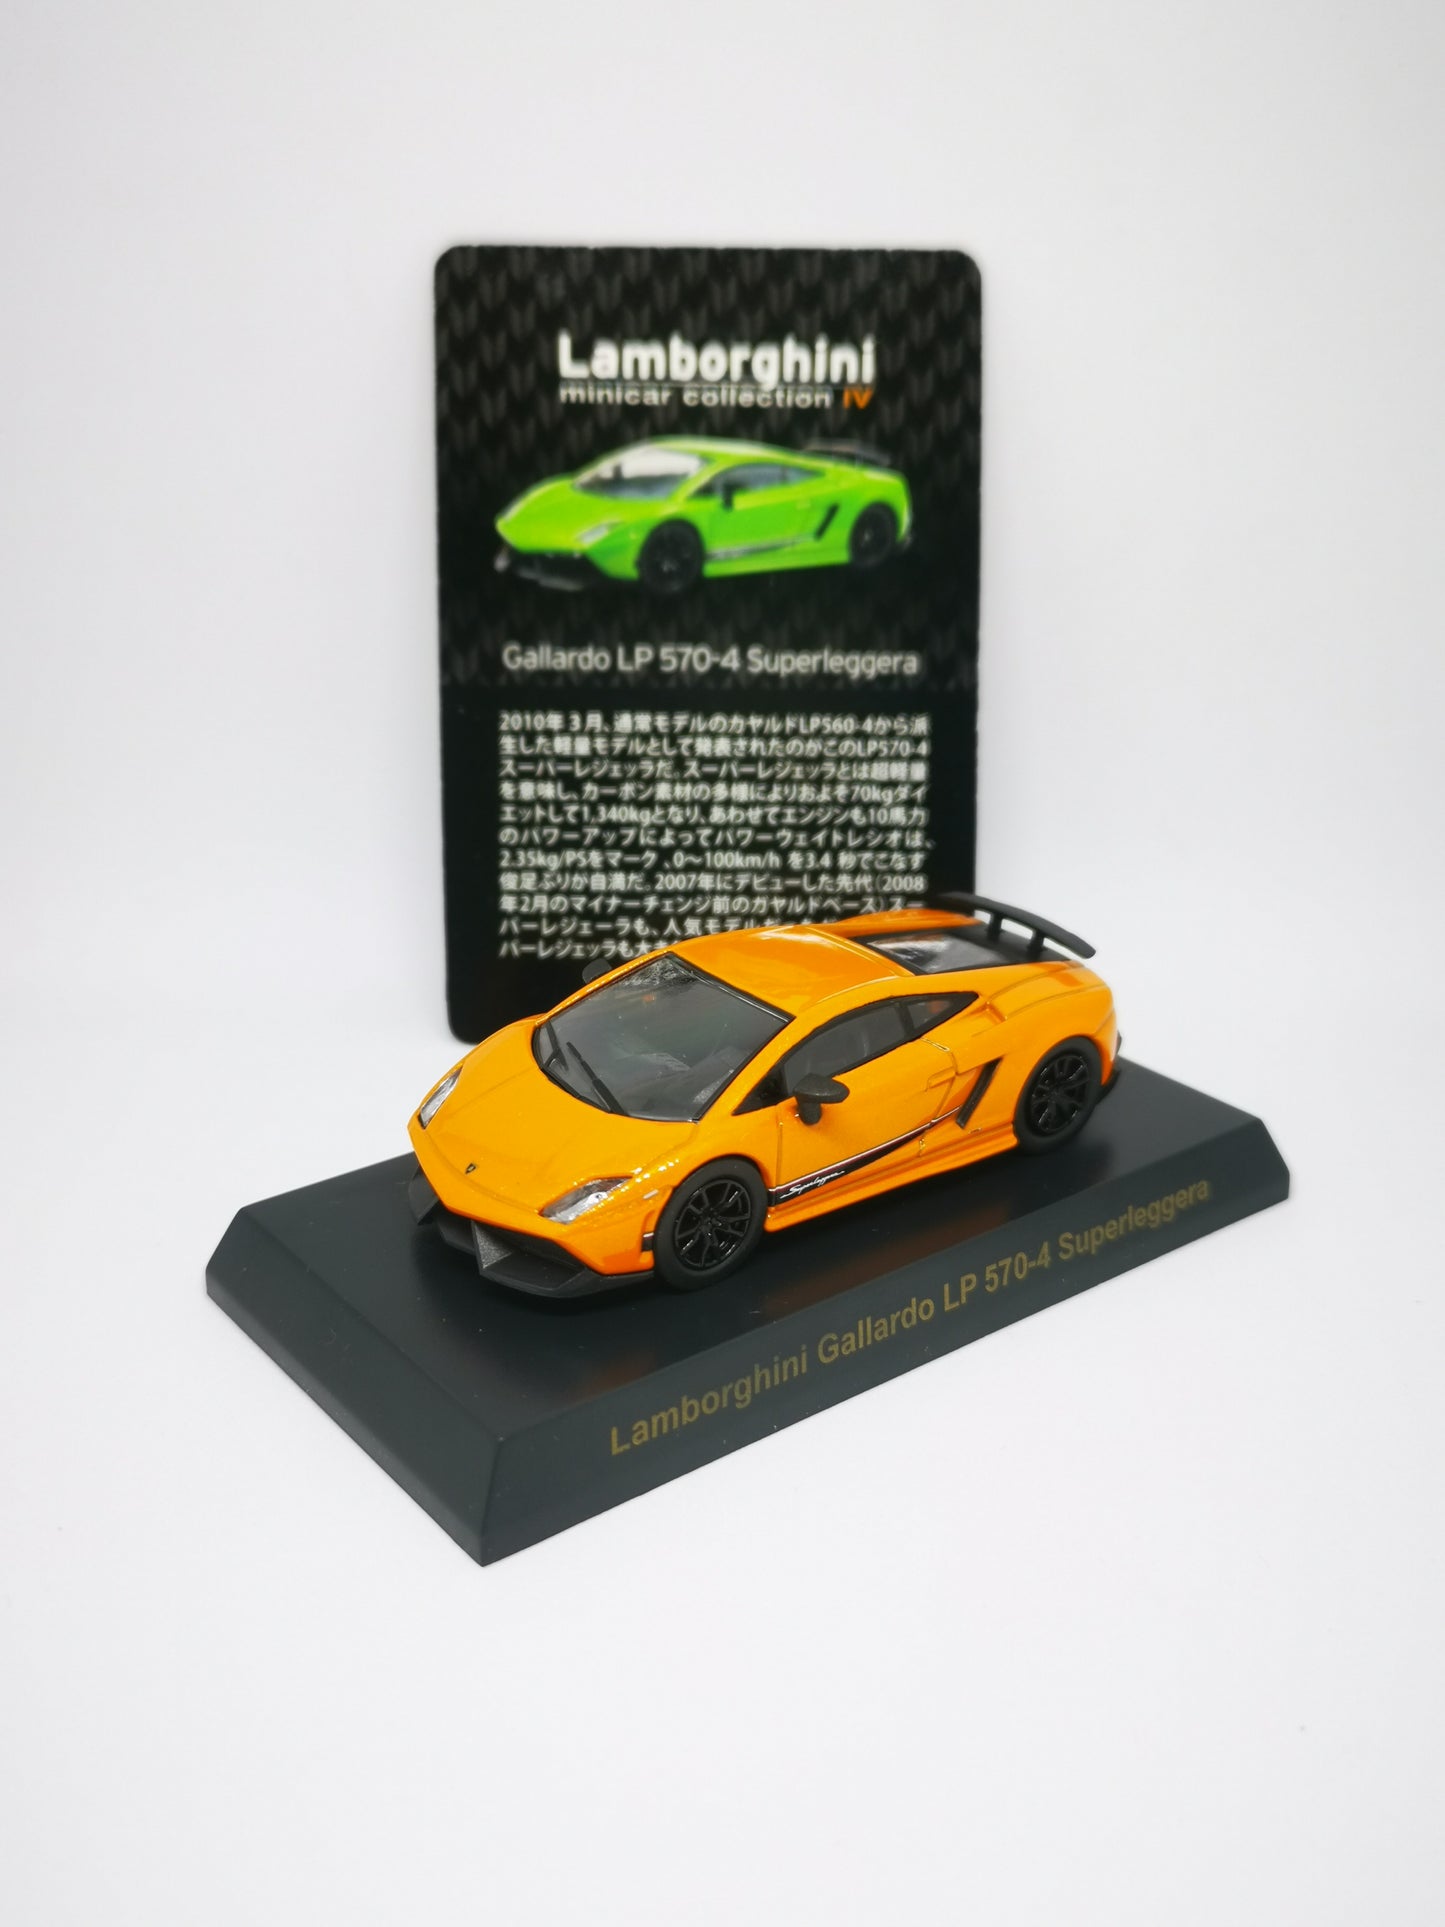 Kyosho 1:64 Scale Minicar Collection Lamborghini IV Lamborghini Gallardo LP570-4 Superleggera